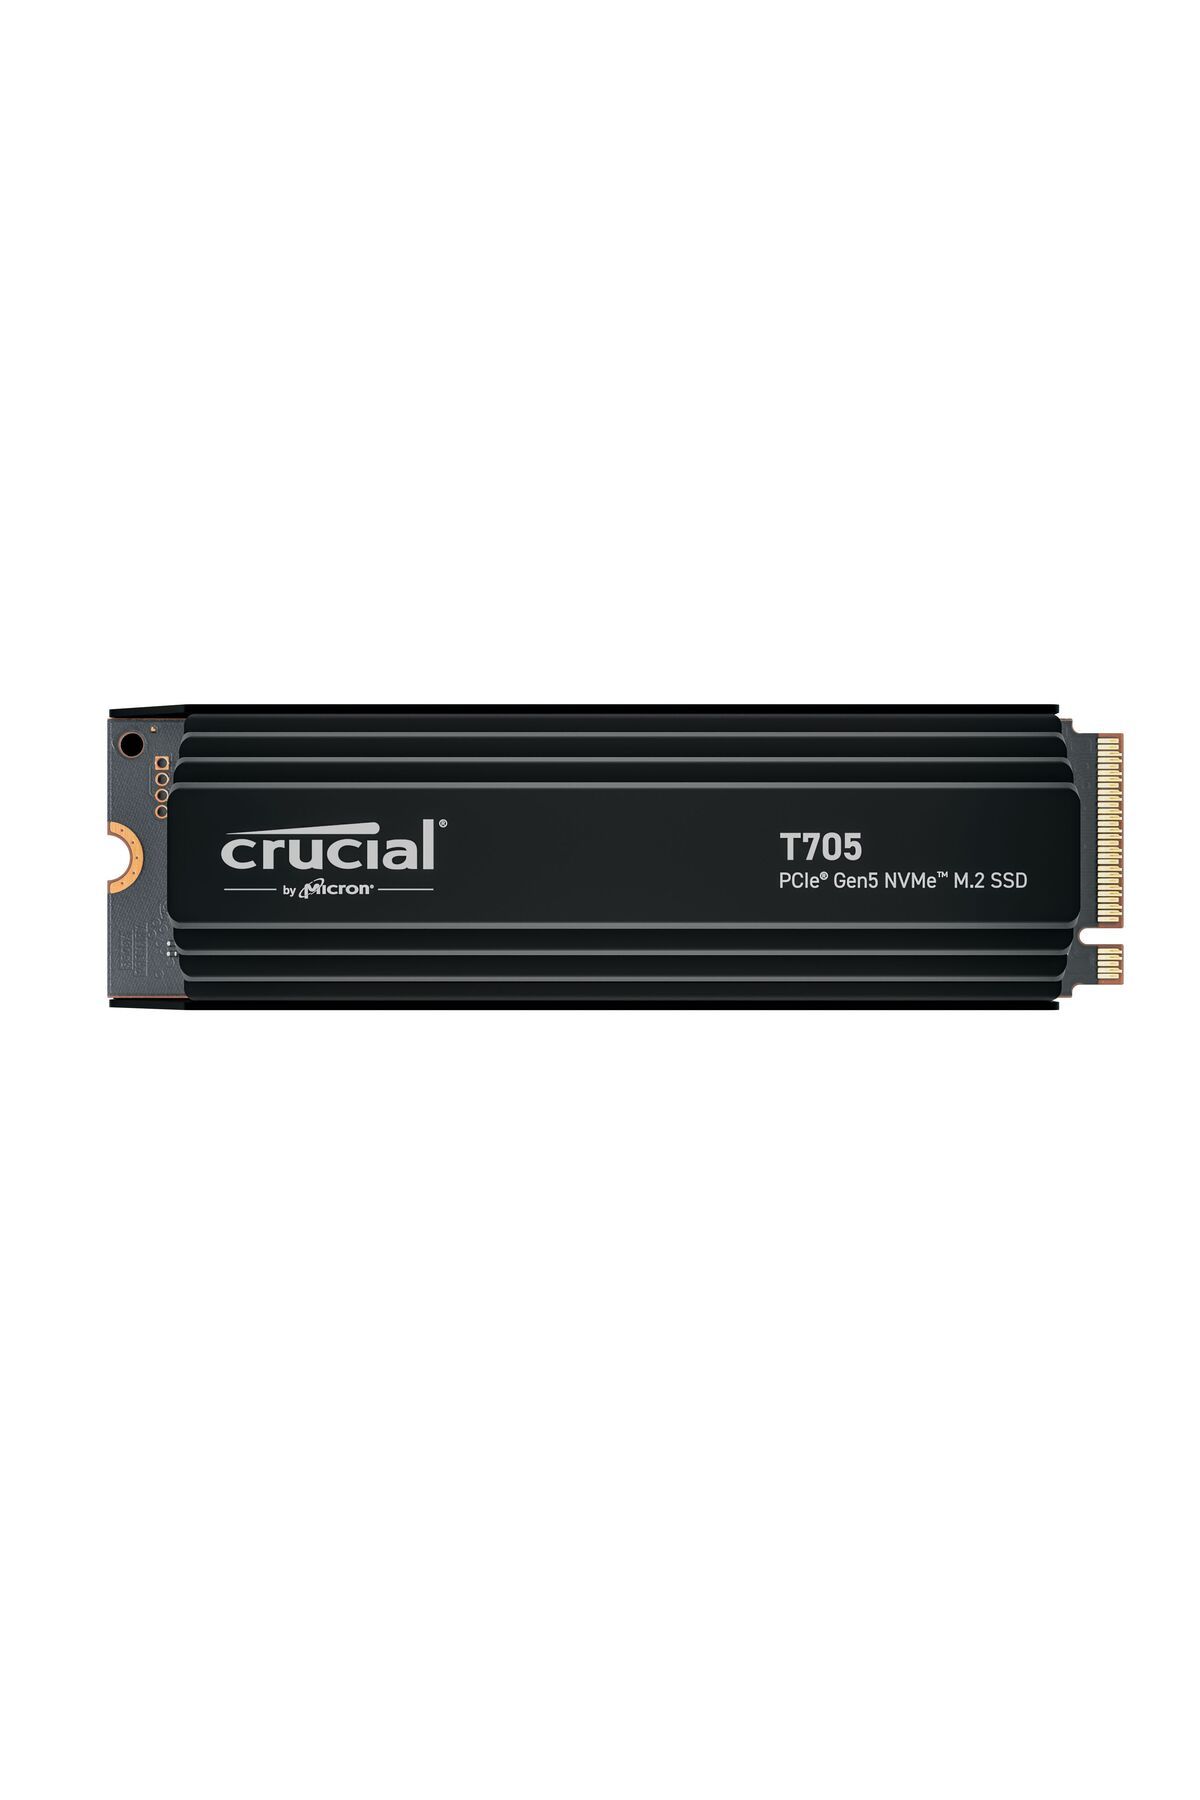 Crucial T705 4TB PCIe Gen5 NVMe M.2 SSD CT4000T705SSD5 (14100-12600 MBs) Heatsink Soğutuculu